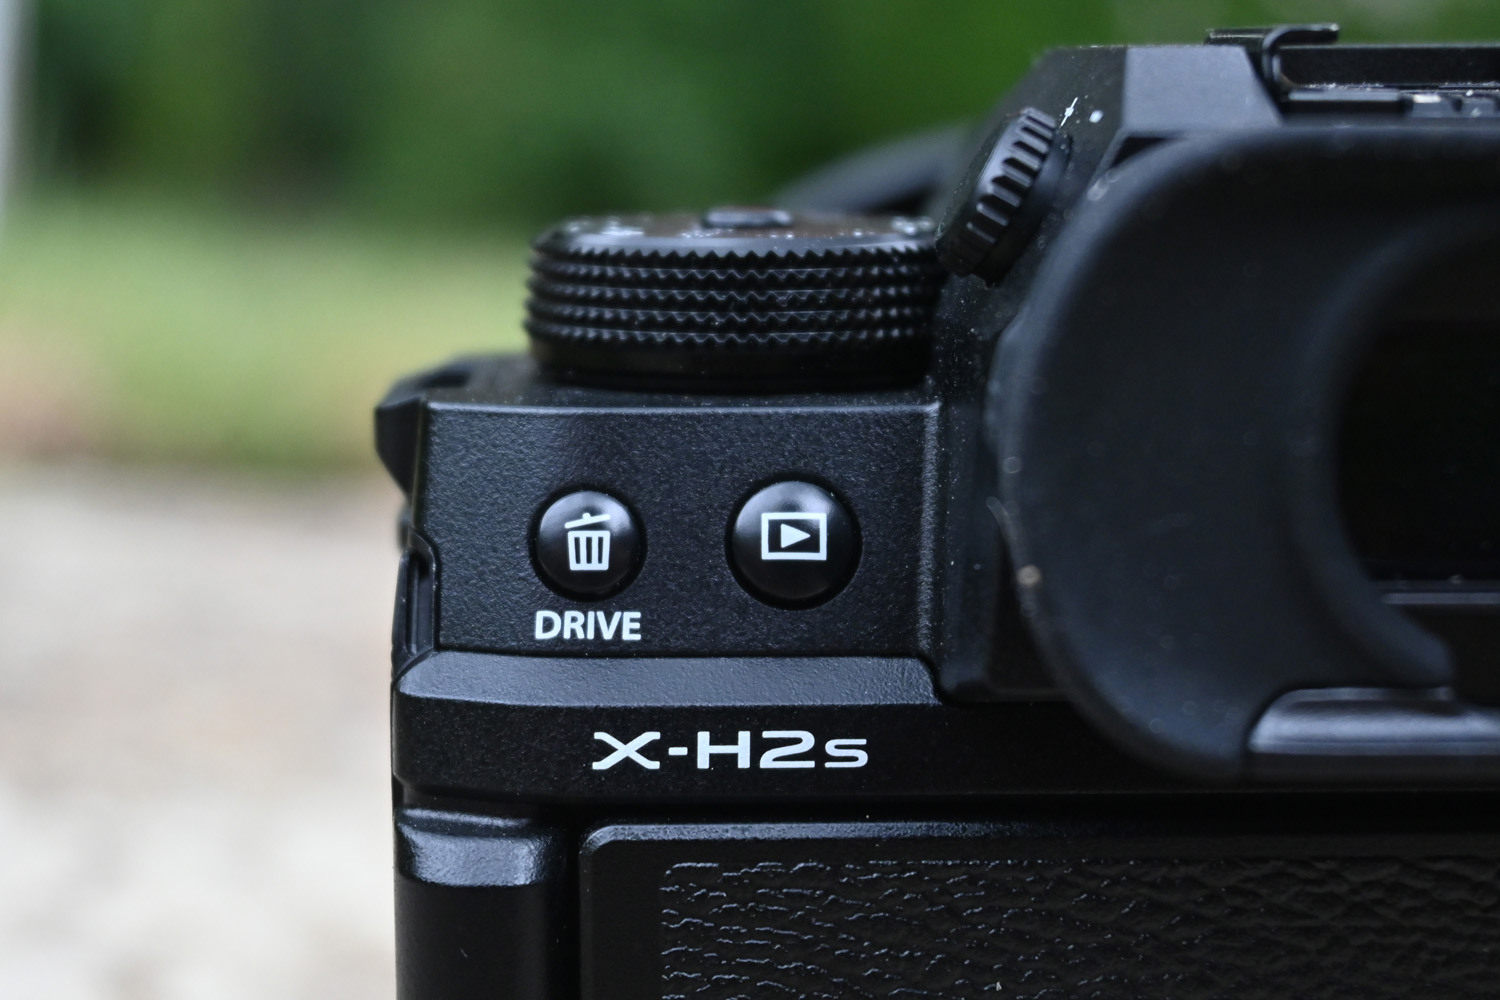 Fuji X-H2S digital system camera close-up on logo